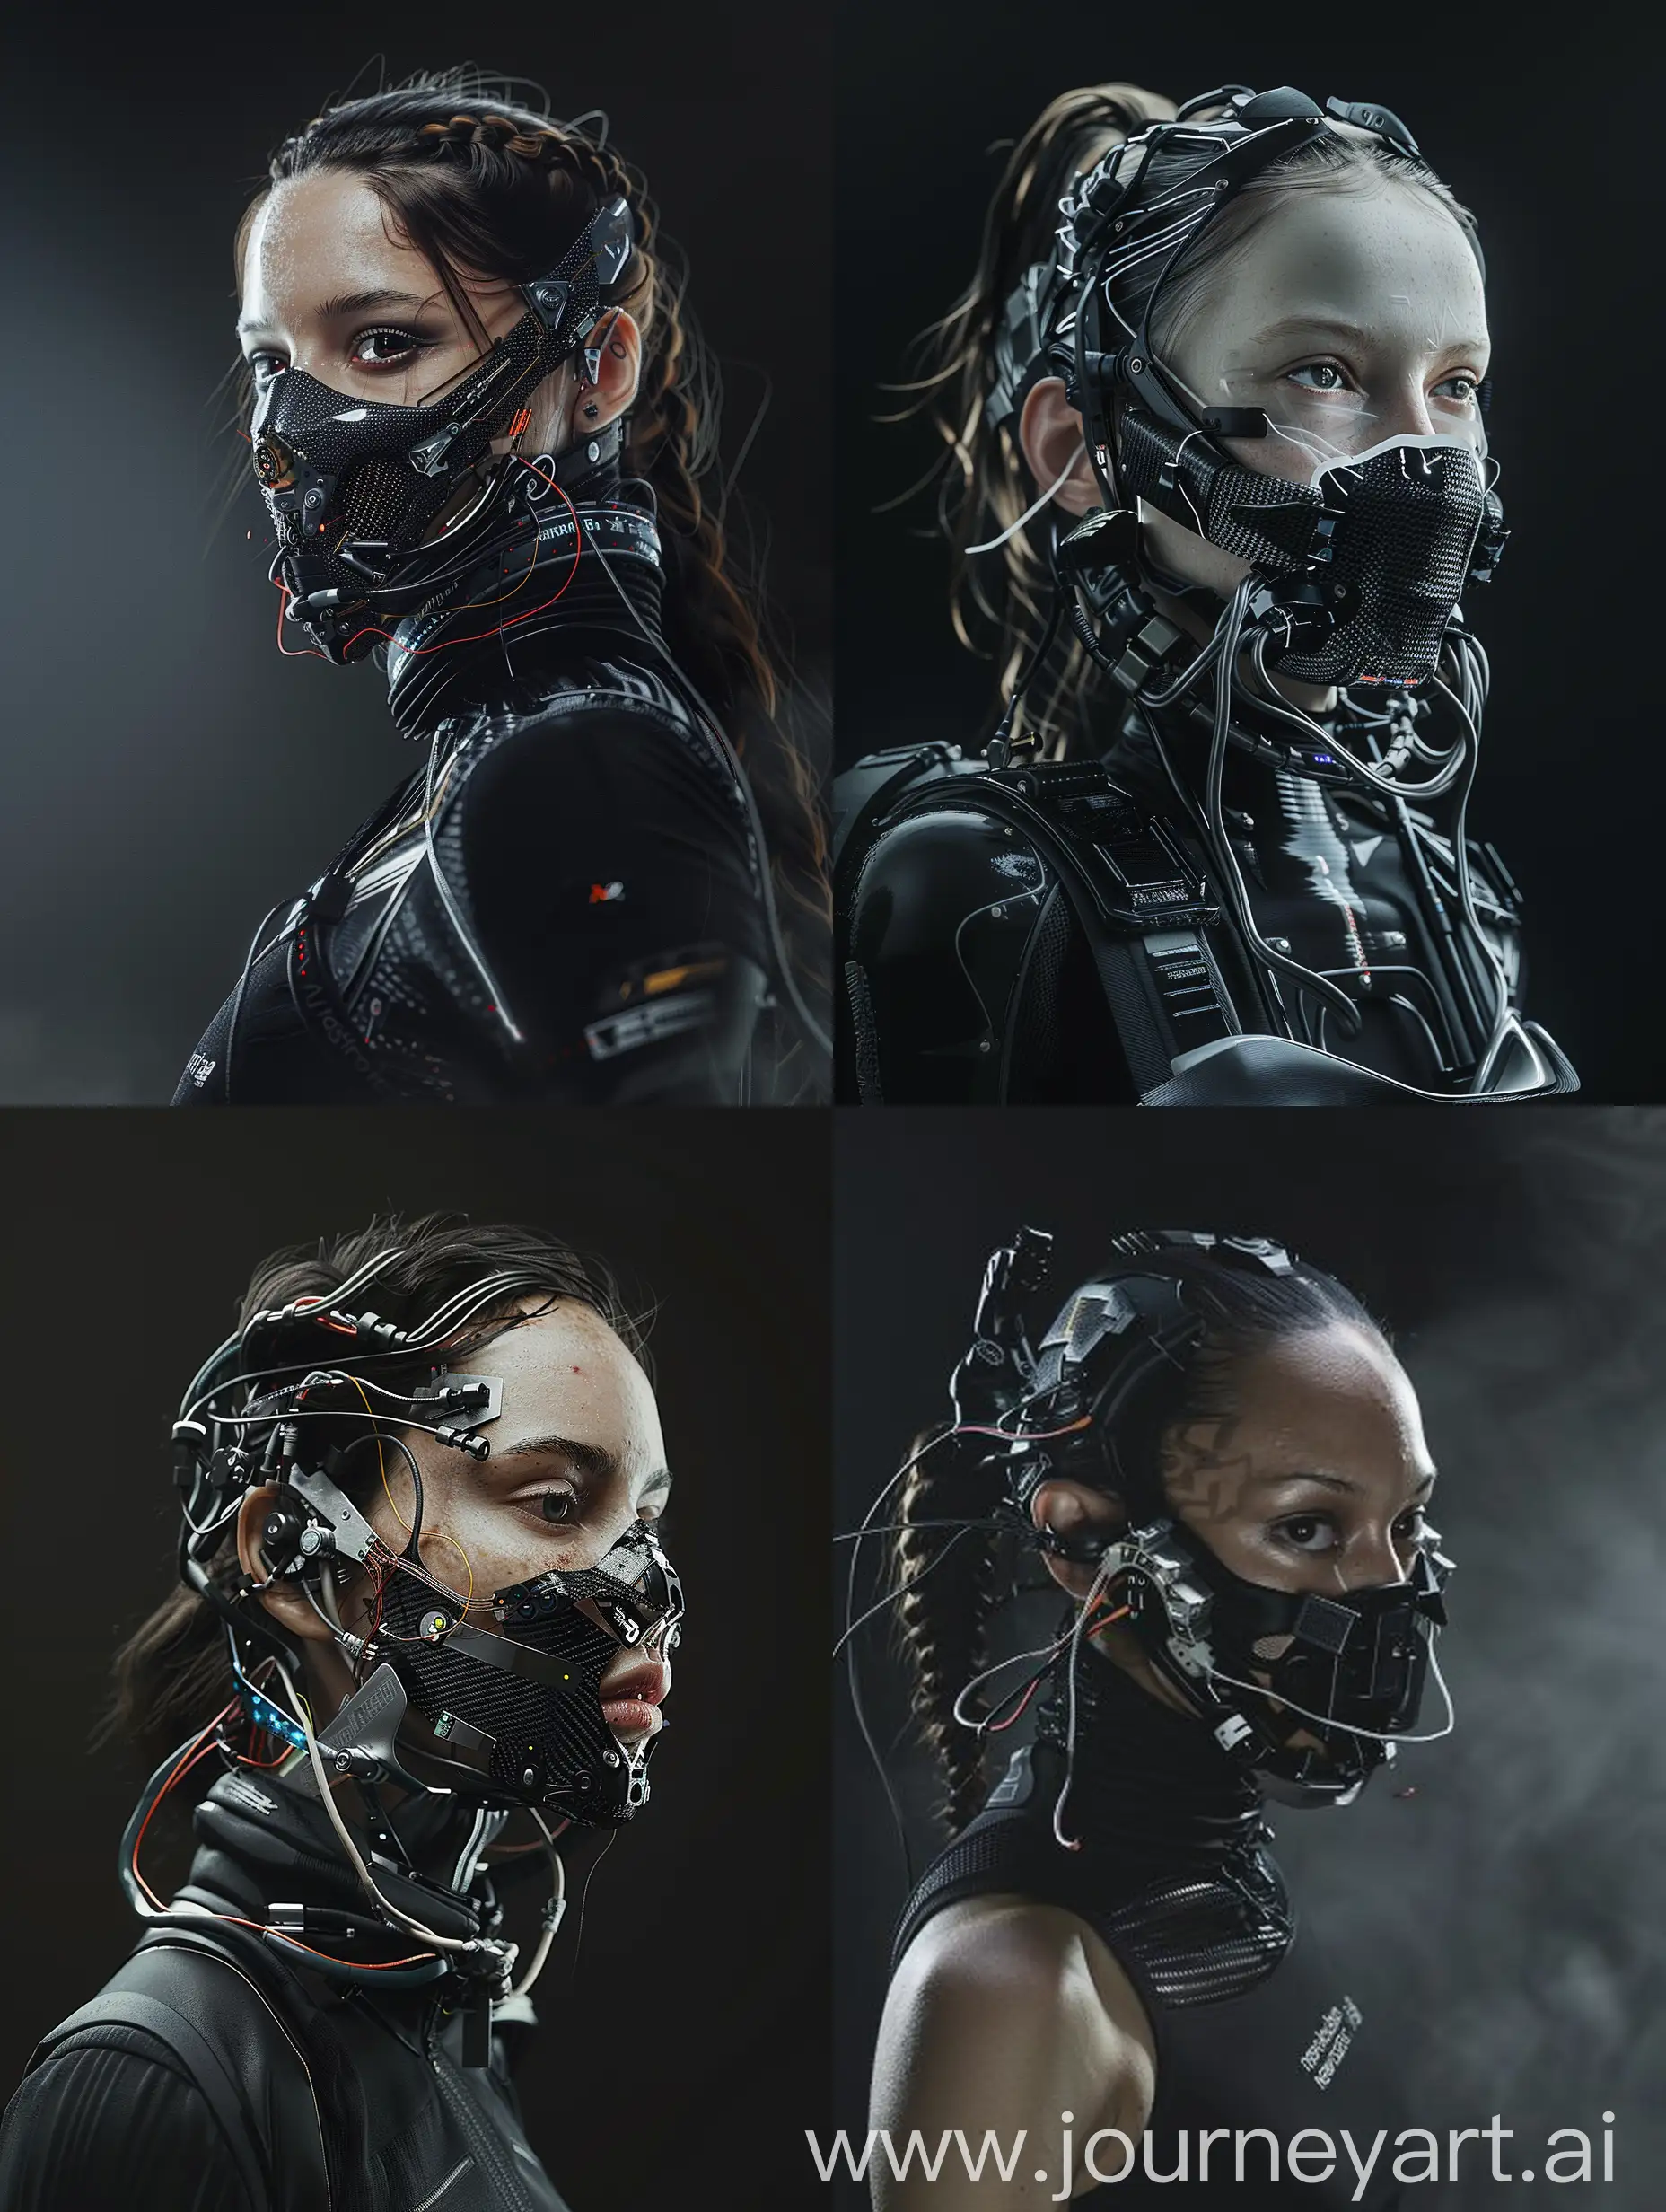 Futuristic-Cyberpunk-Femme-Fatale-with-Carbon-Fiber-Mask